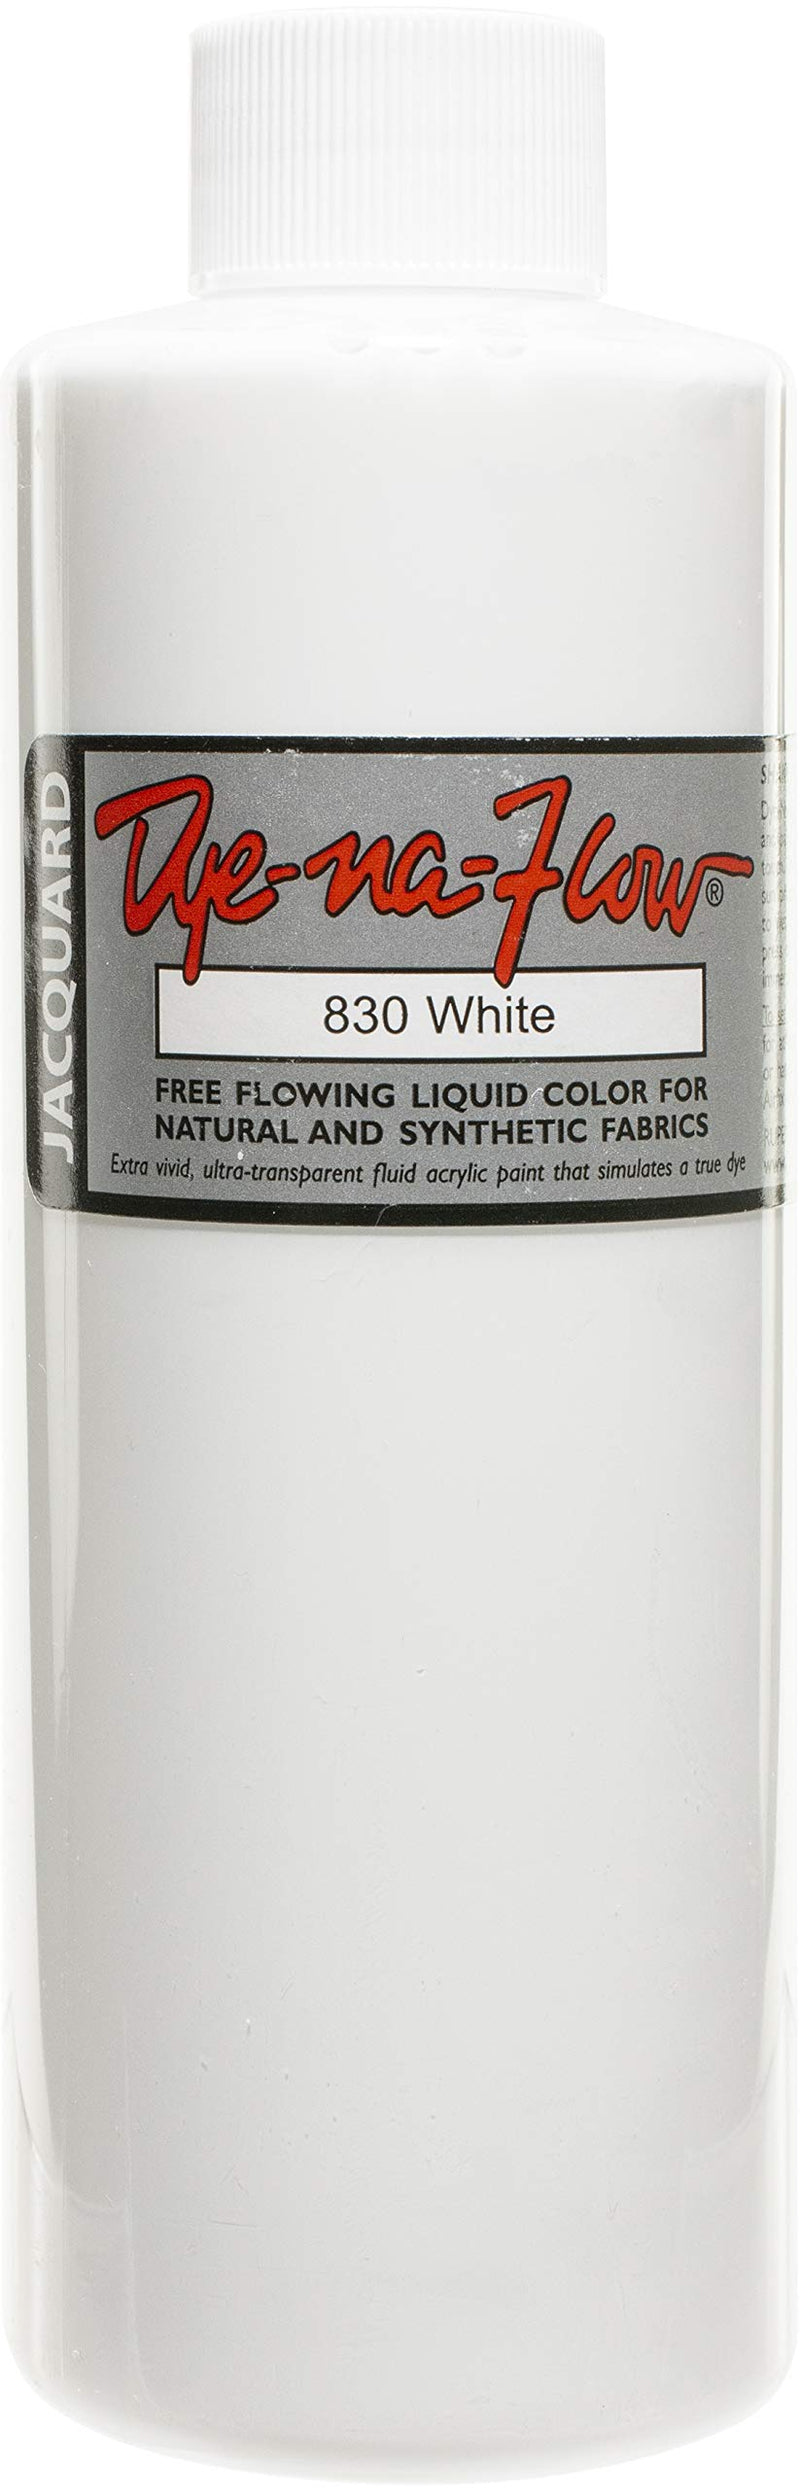 Jacquard Products Jacquard Dye-Na-Flow Liquid Color 8oz-White